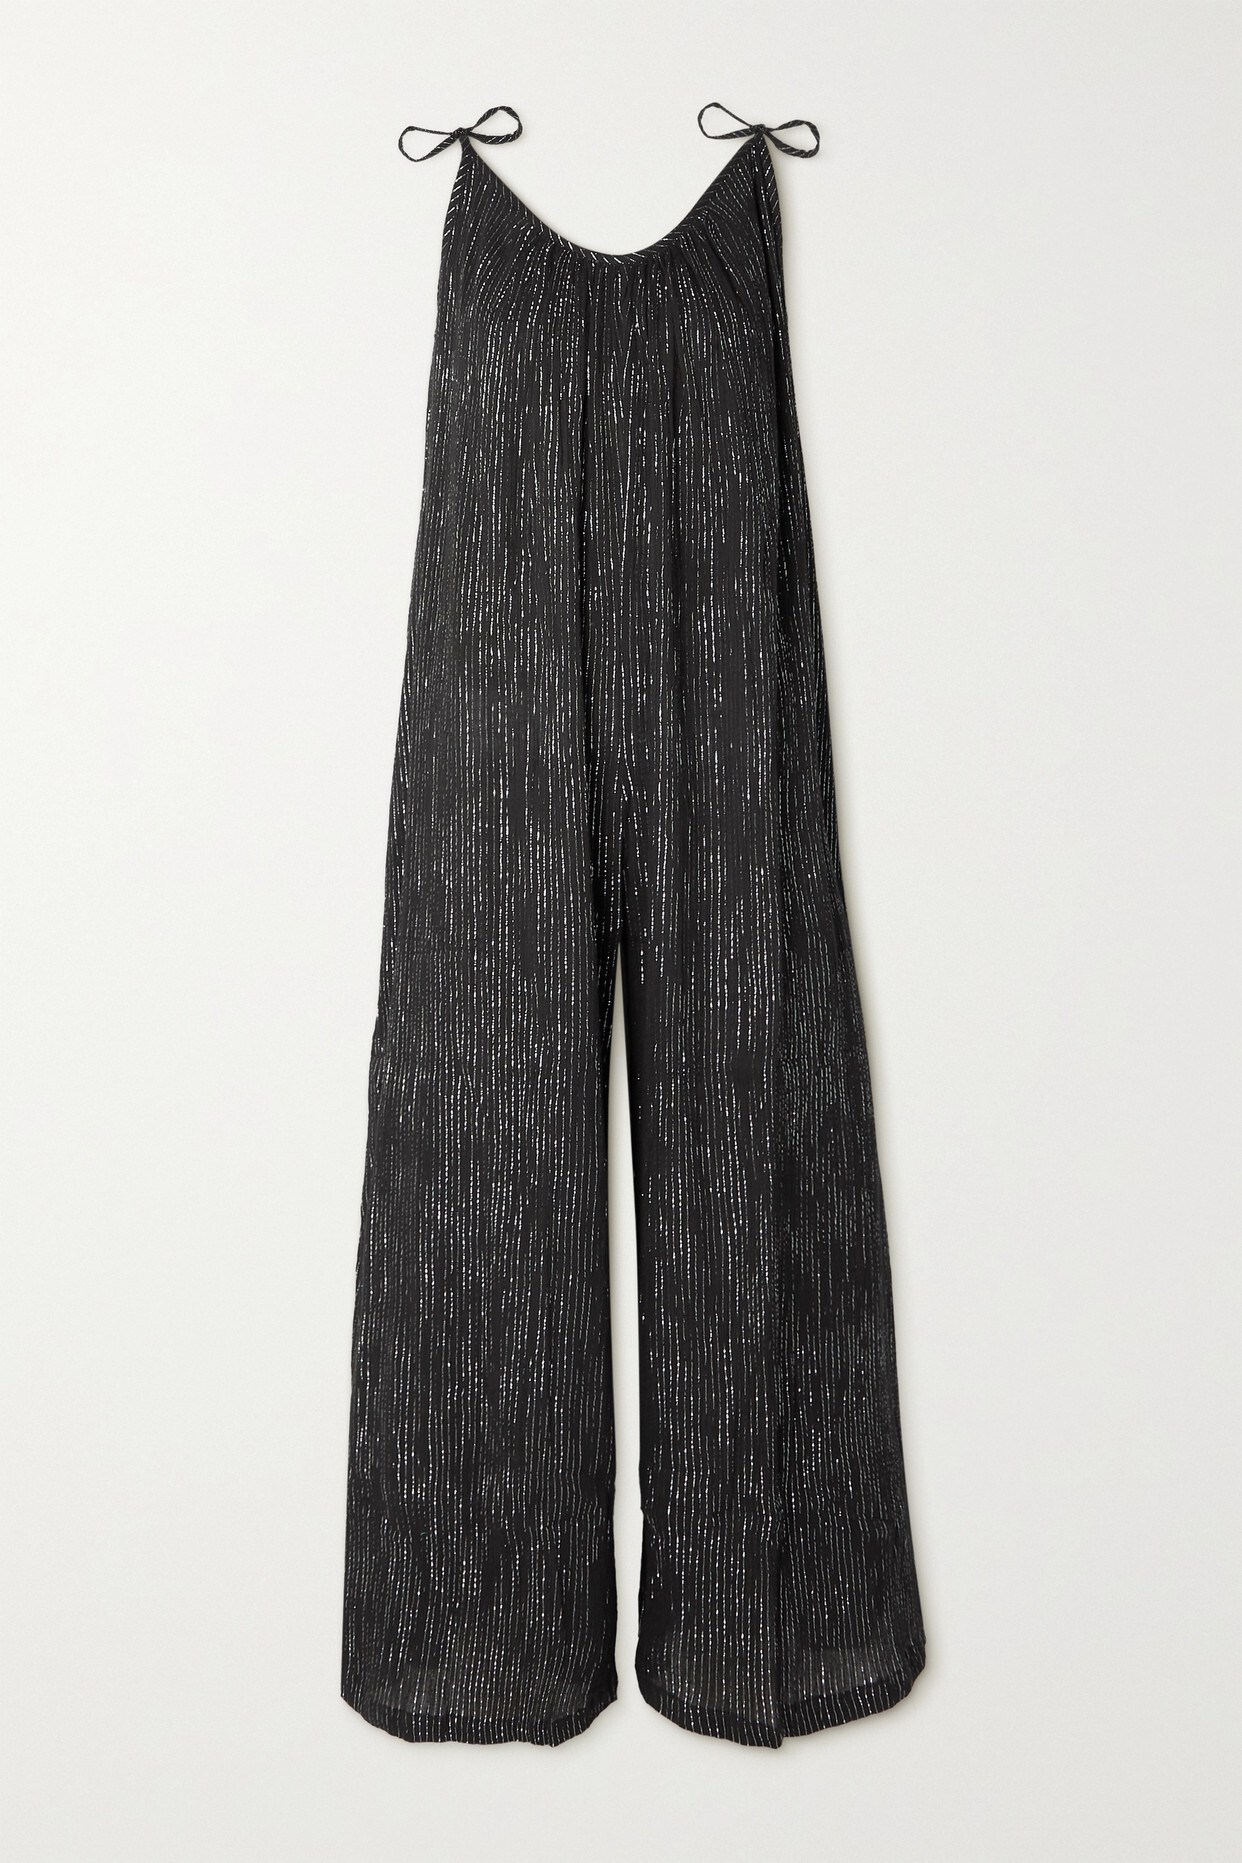 Suzie Kondi - Besa Metallic Crinkled Cotton-blend Gauze Jumpsuit - Black